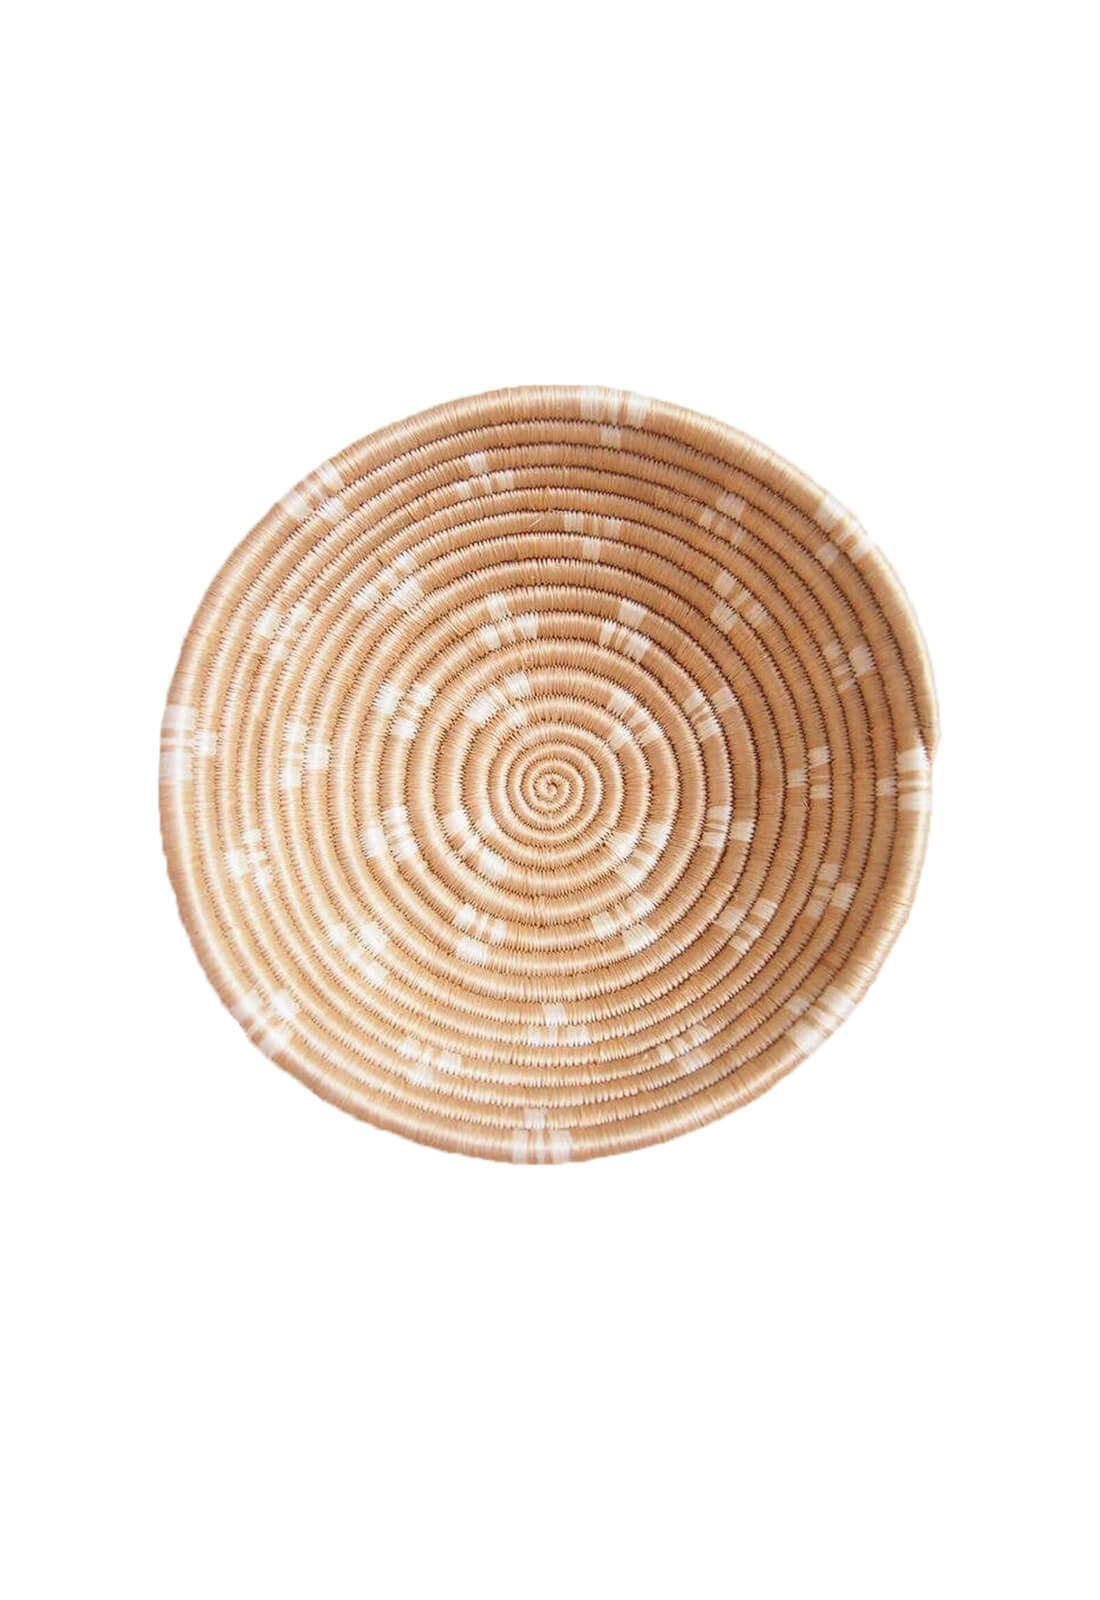 Hand Woven Ntamba Basket - Tan and White, Small